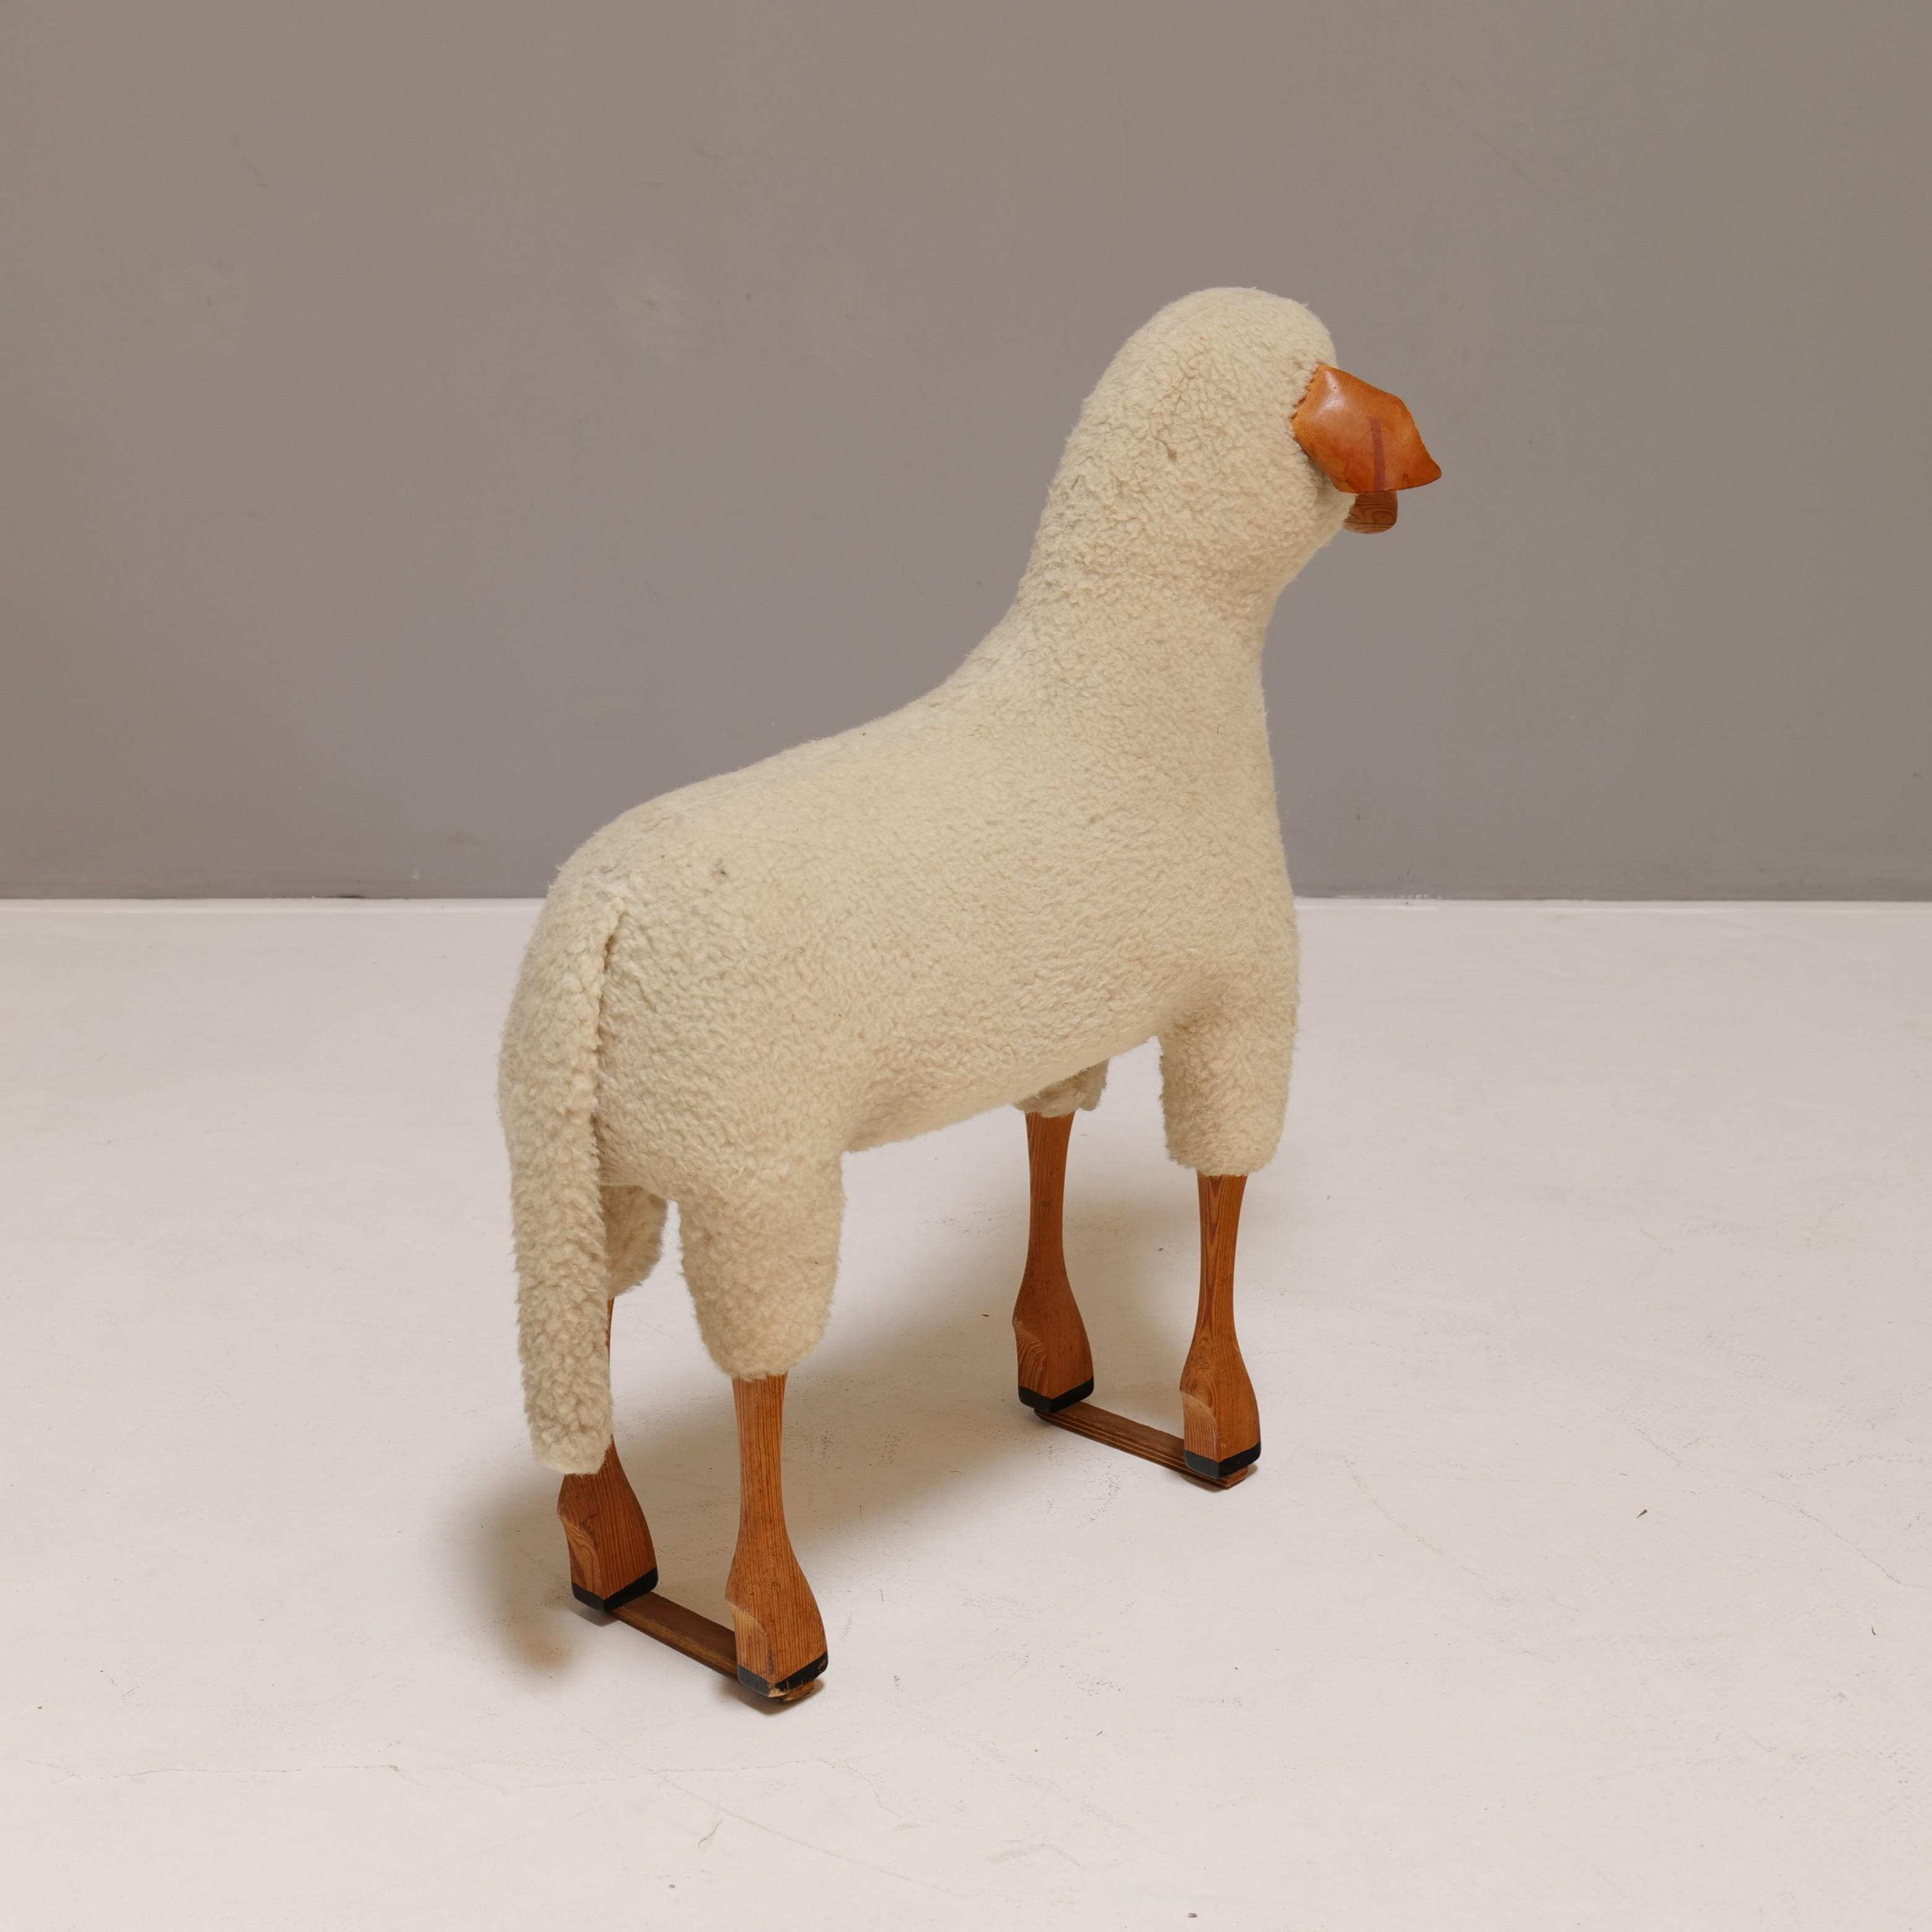 Leather big vintage sheep by Hanns Peter Krafft schaf for Mayr wool - 1970s Germany